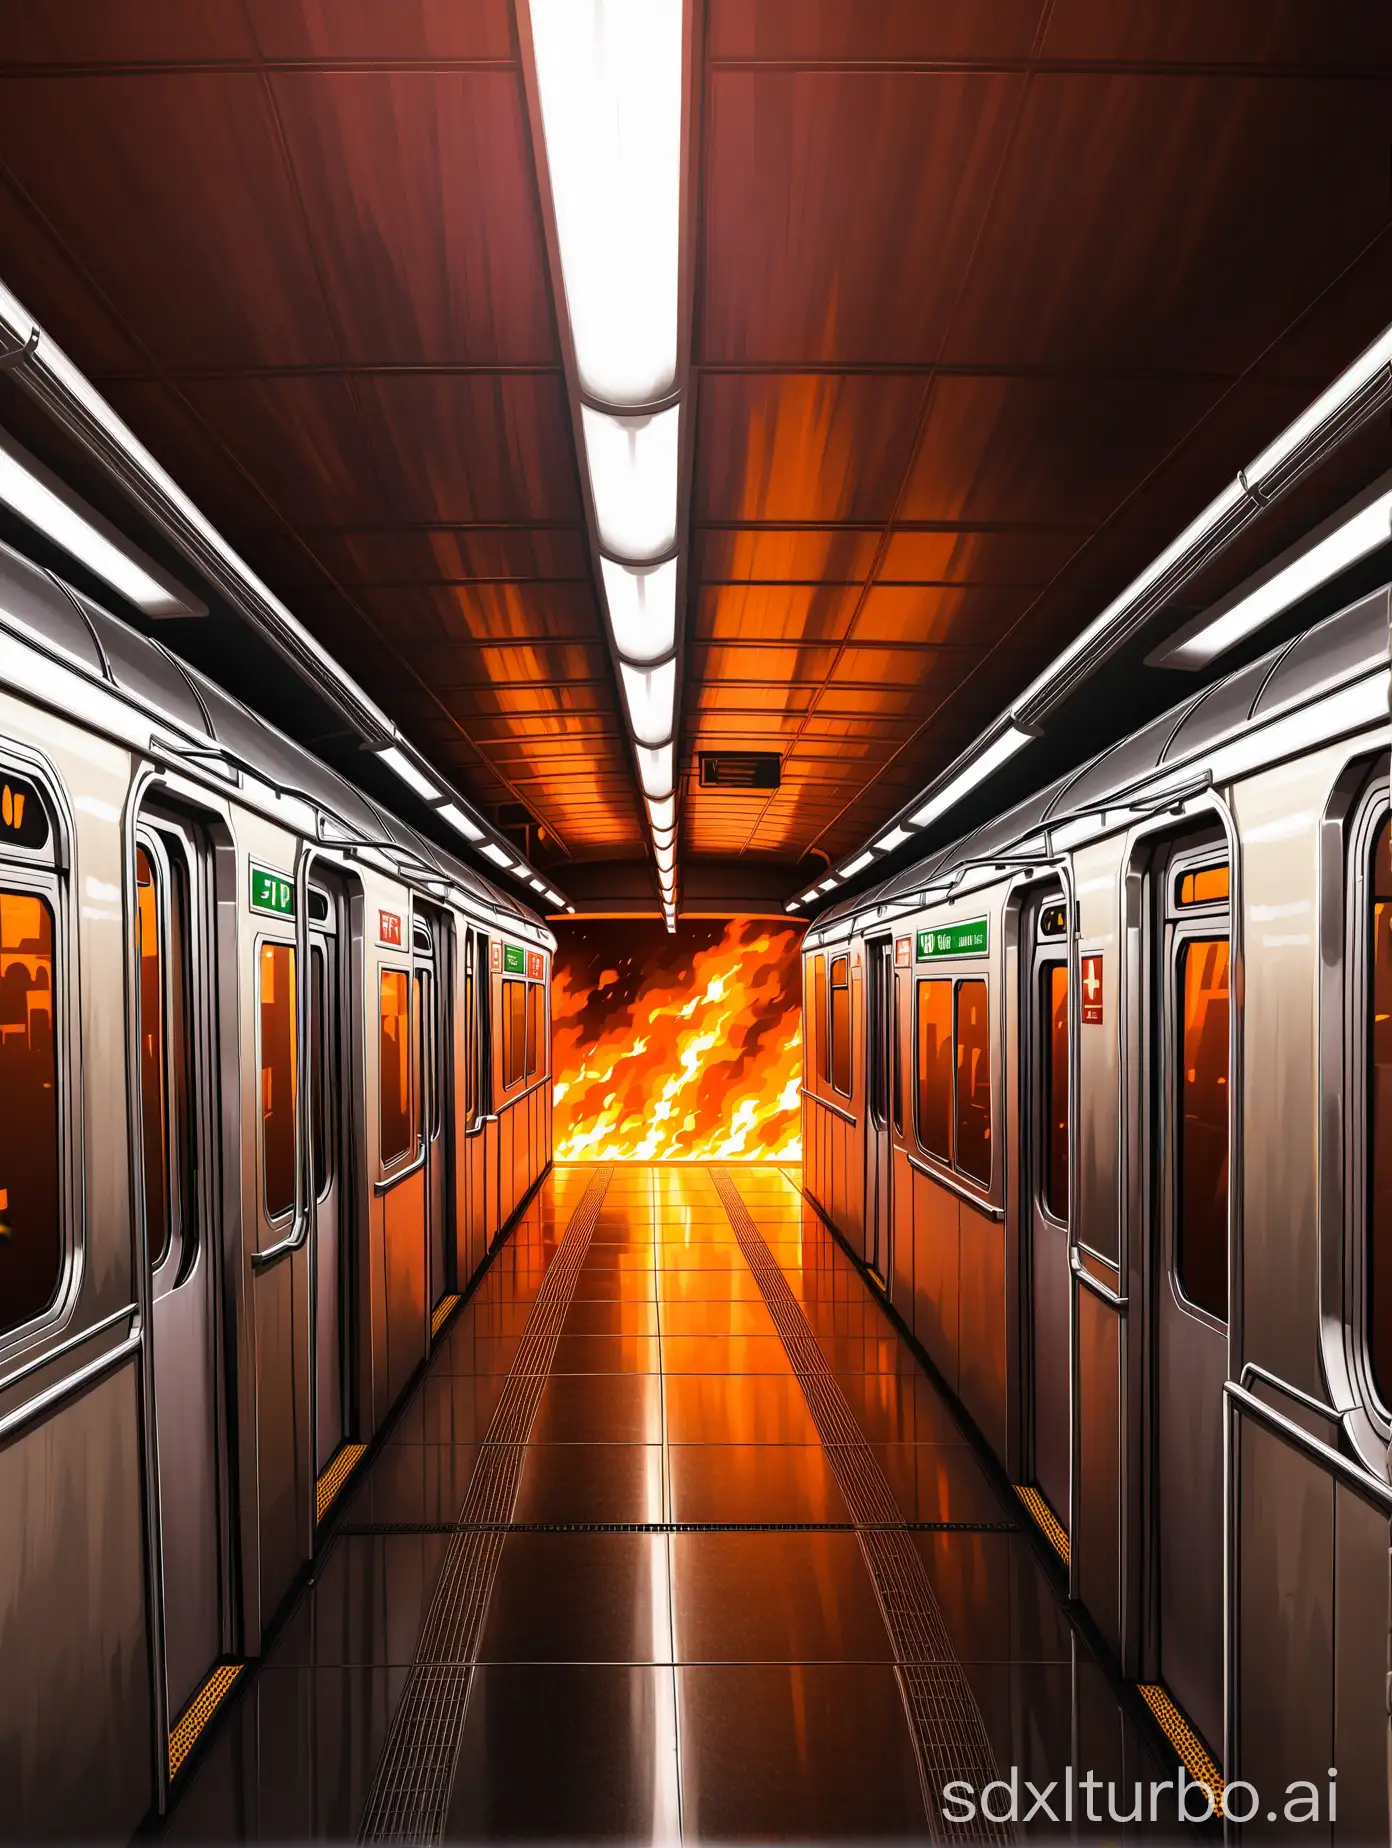 Blazing-Subway-Interior-Engulfed-in-Flames